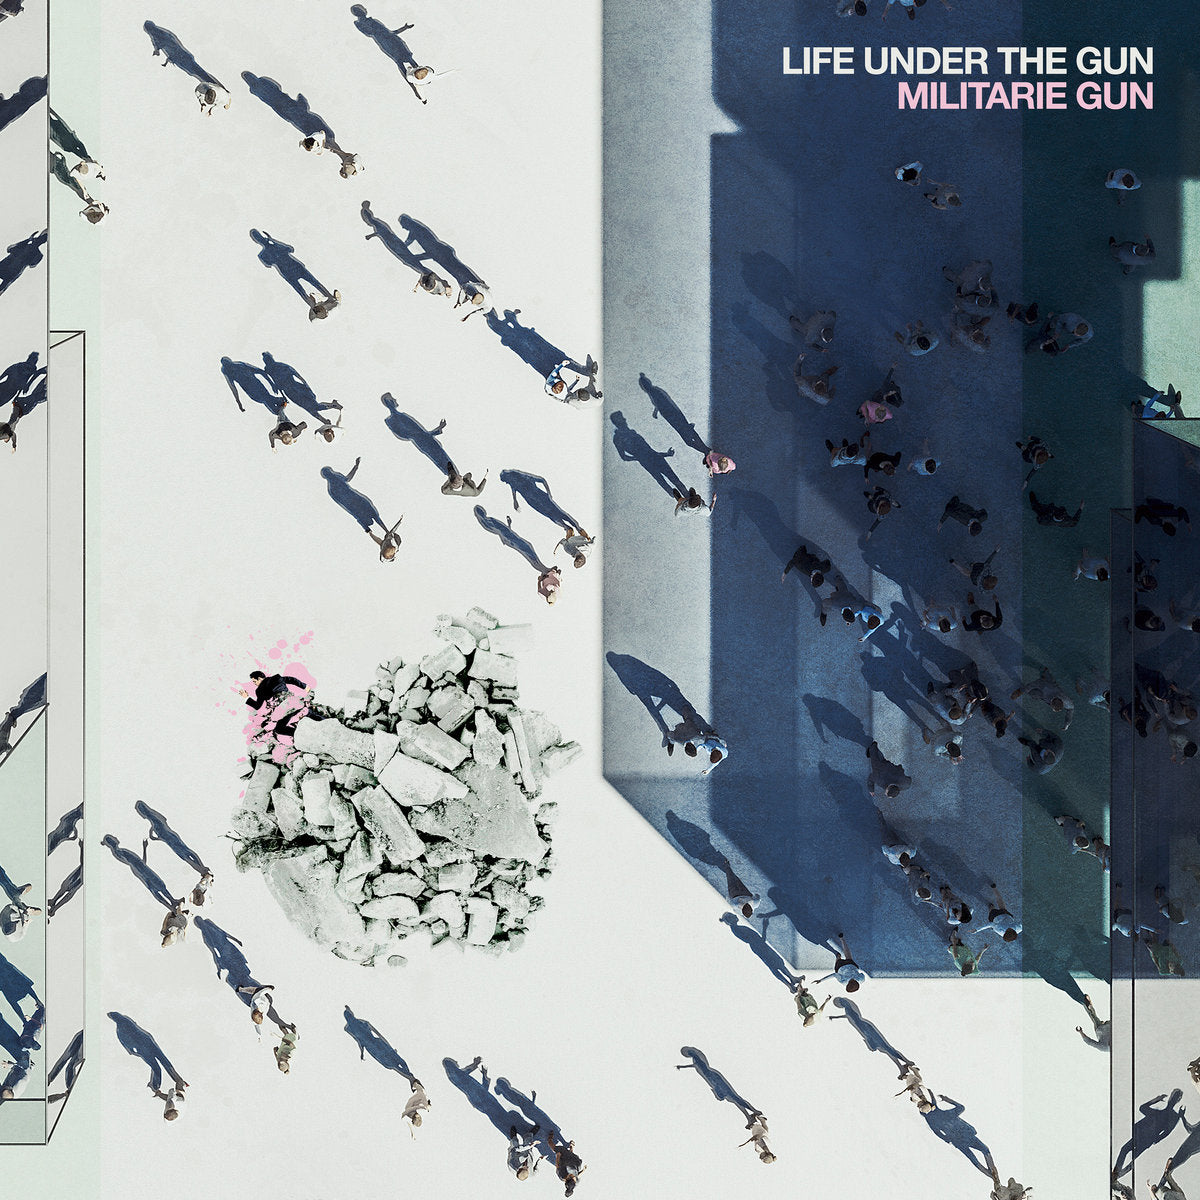 Militarie Gun "Life Under The Gun" 12" Vinyl